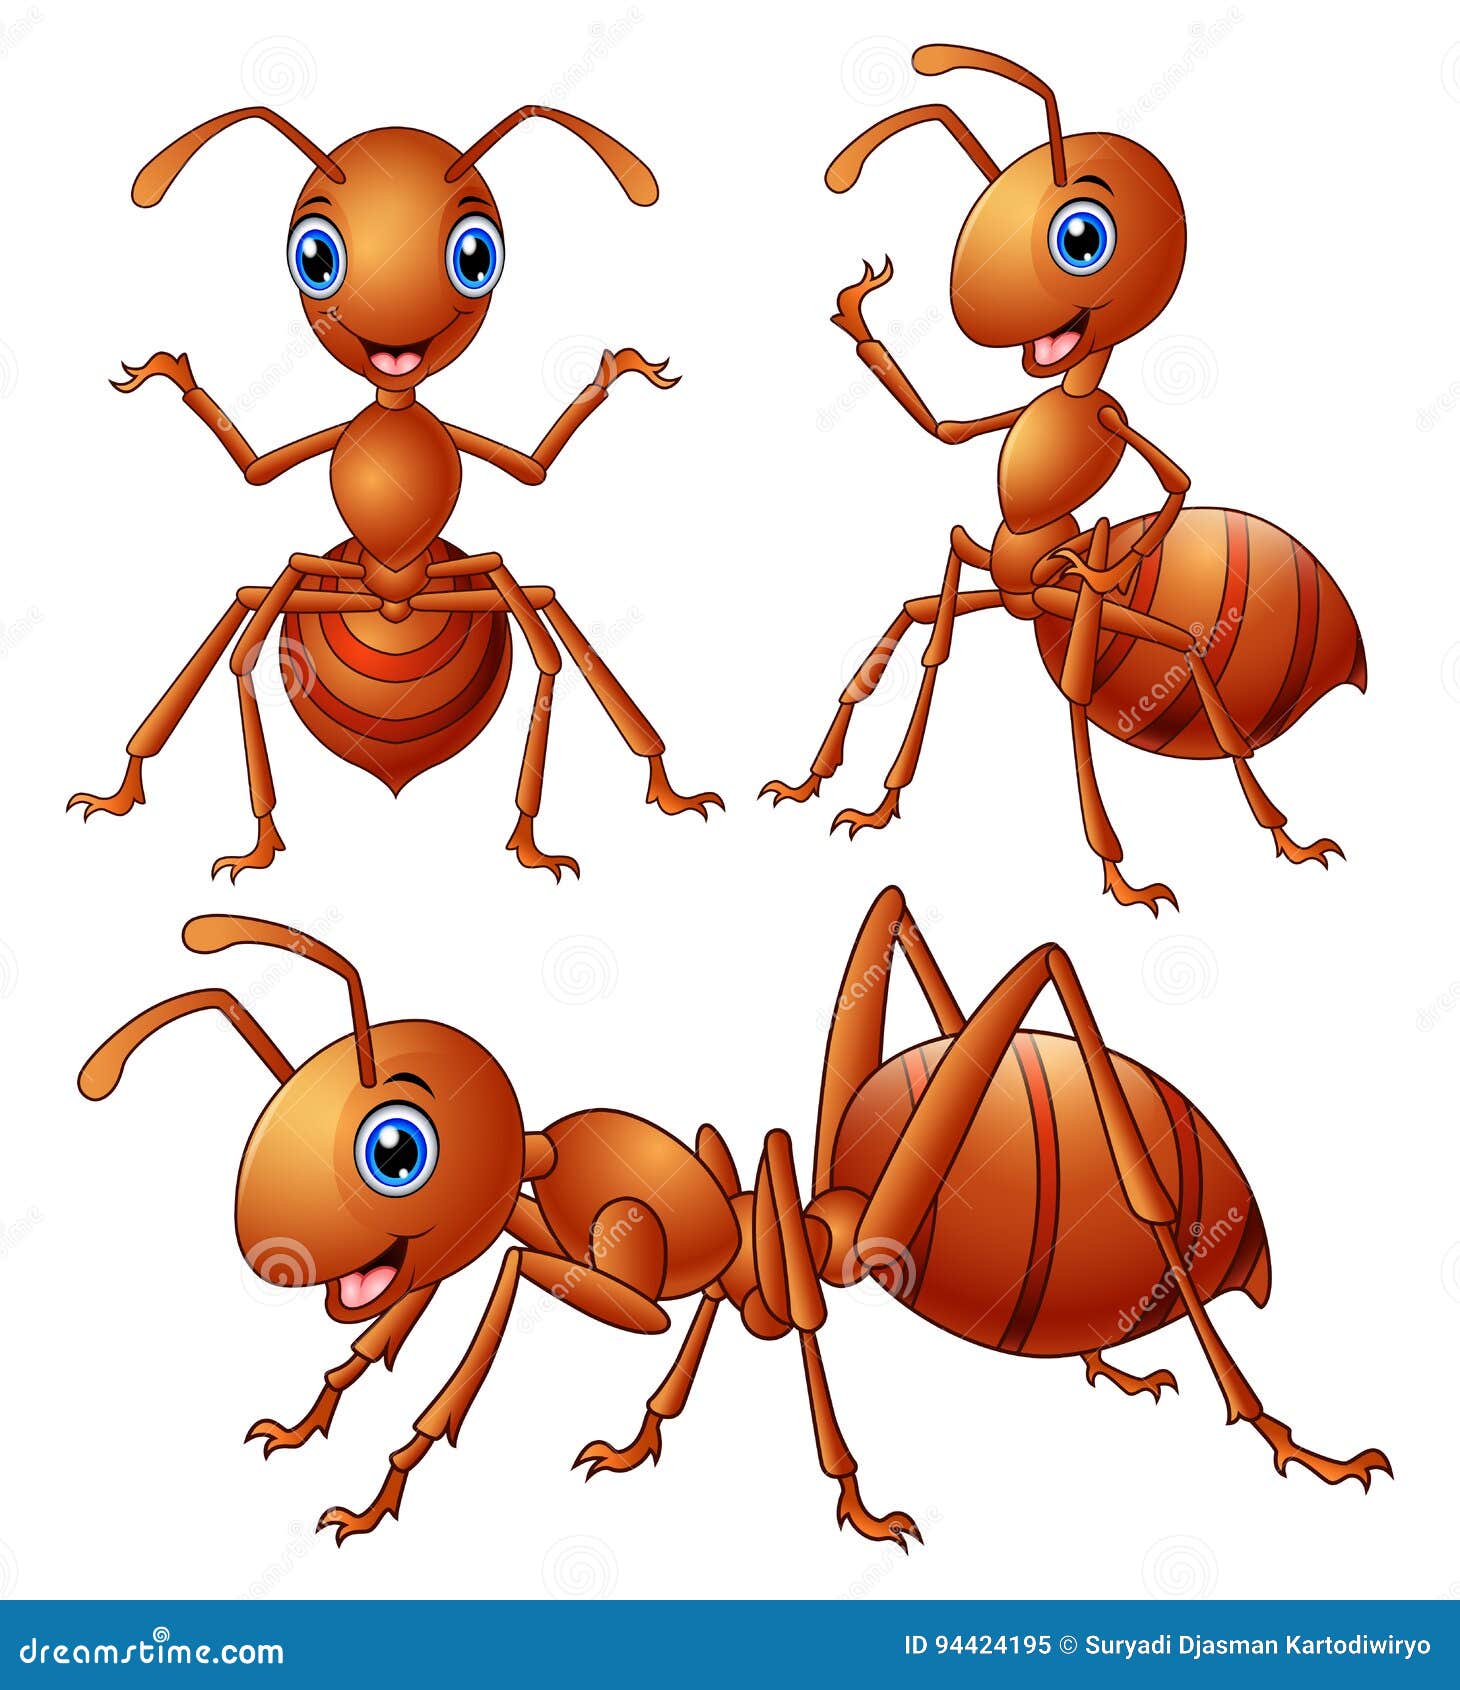 ants cartoon